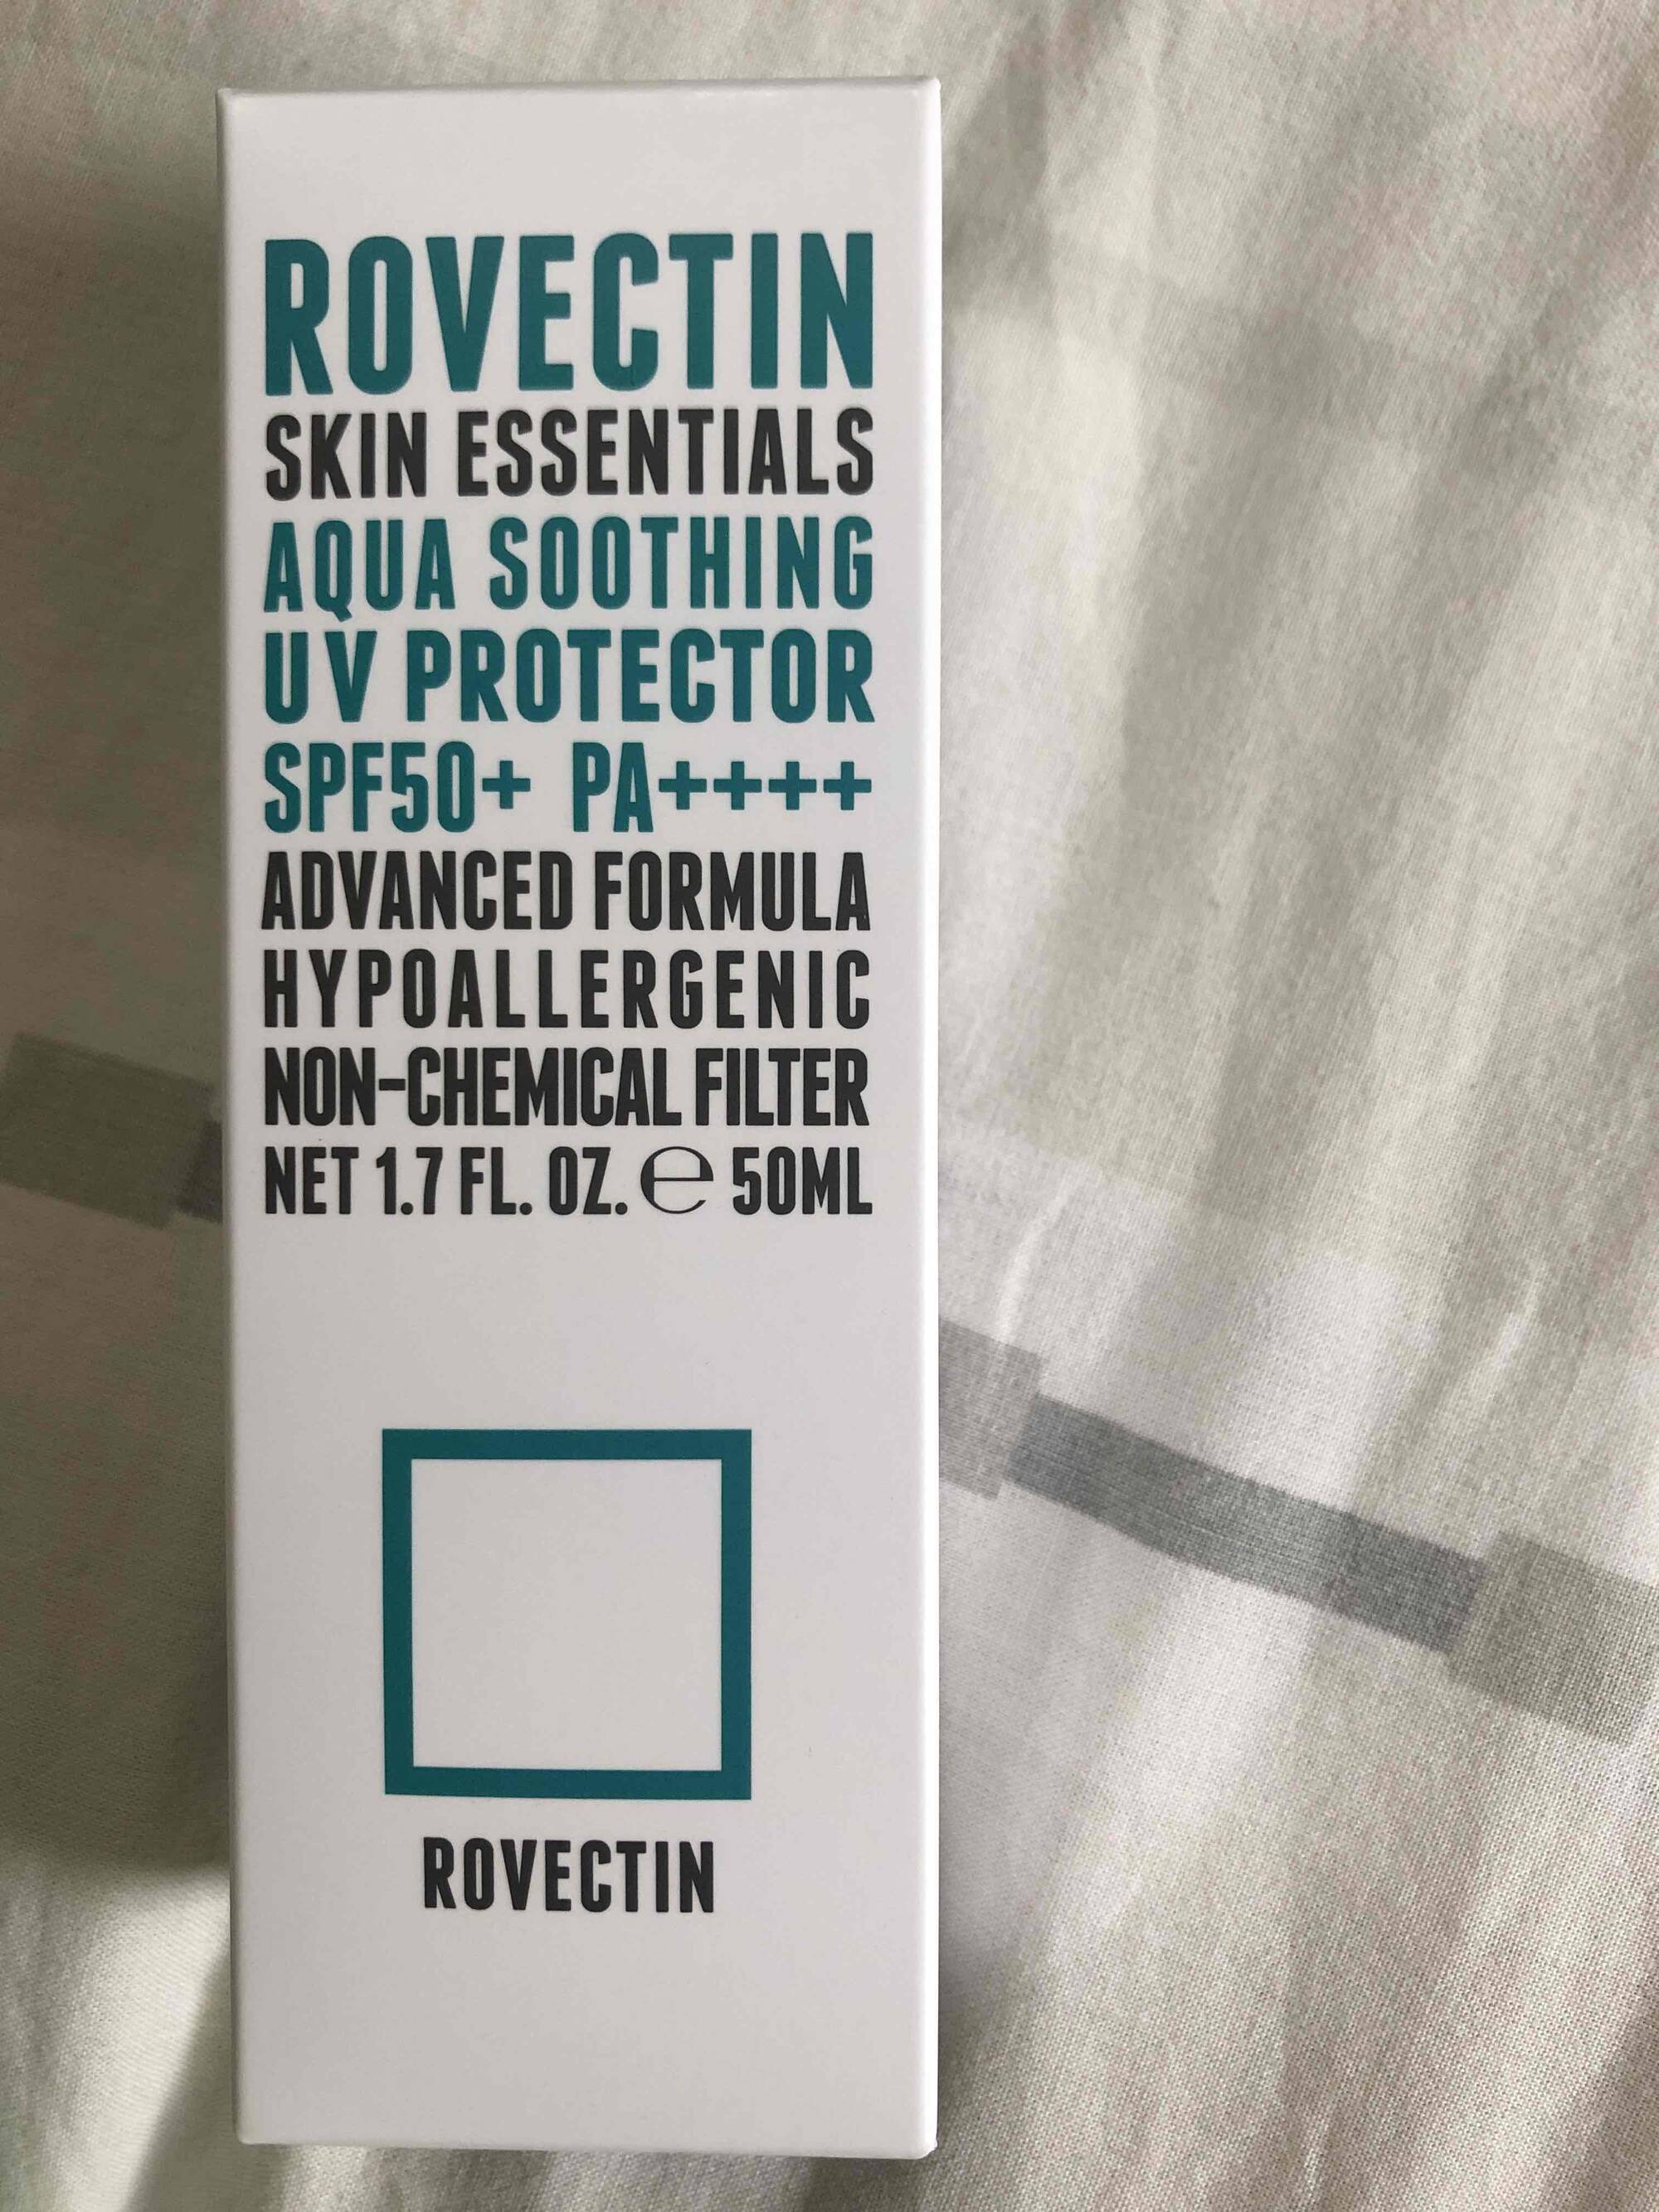 ROVECTIN - Skin essentials aqua soothing UV protector SPF 50+